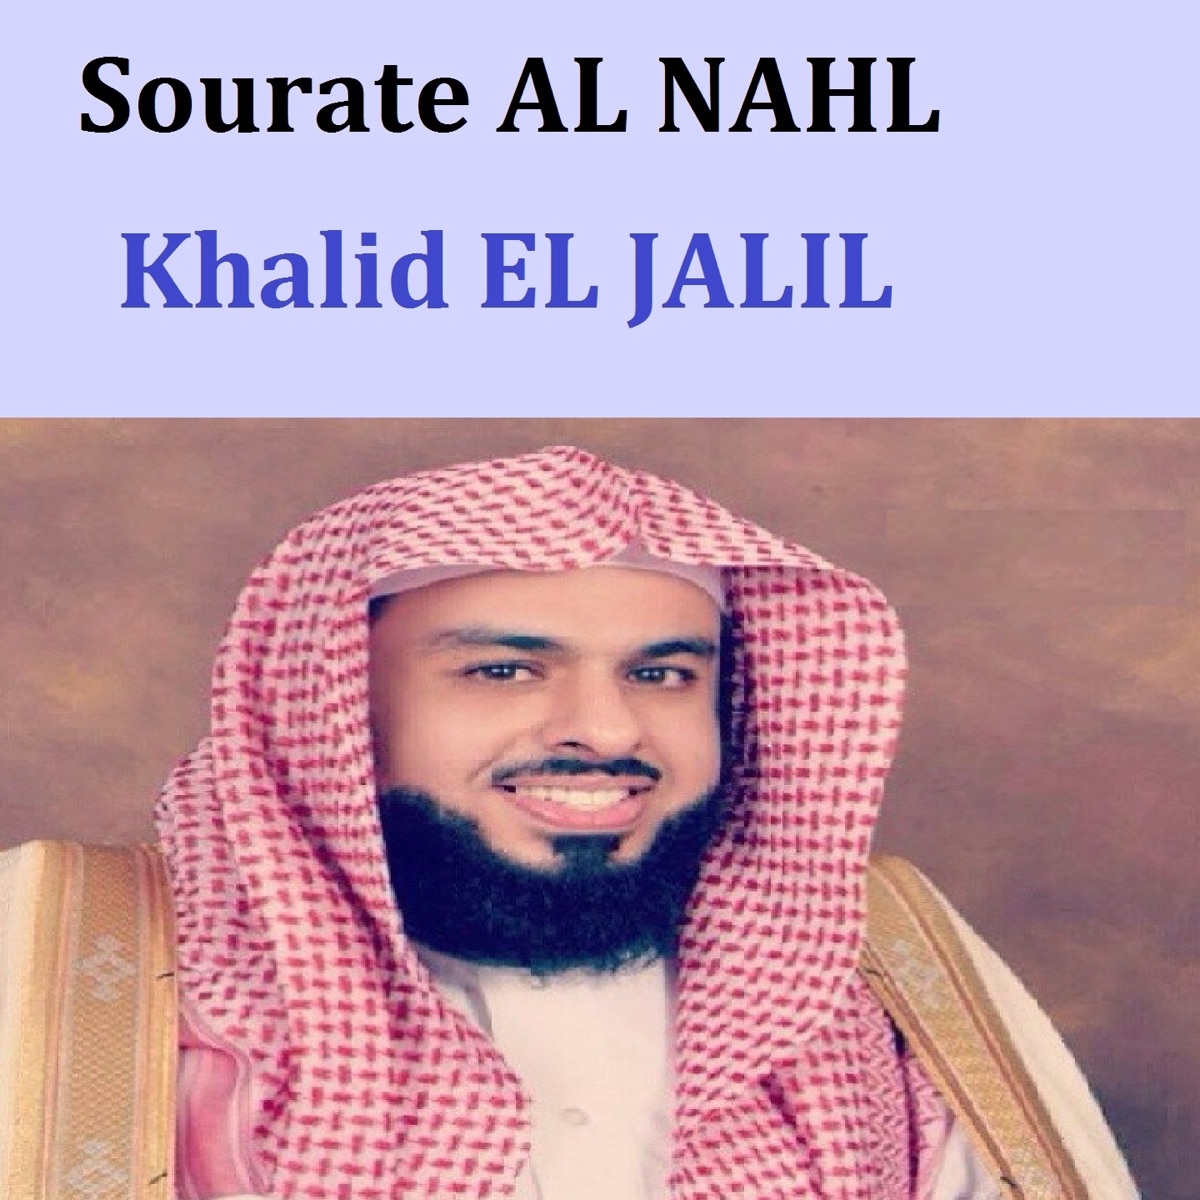 Sourate Al Kahf, Maryam et Taha (Quran - Coran - Islam) by Khalid El Jalil  on Apple Music